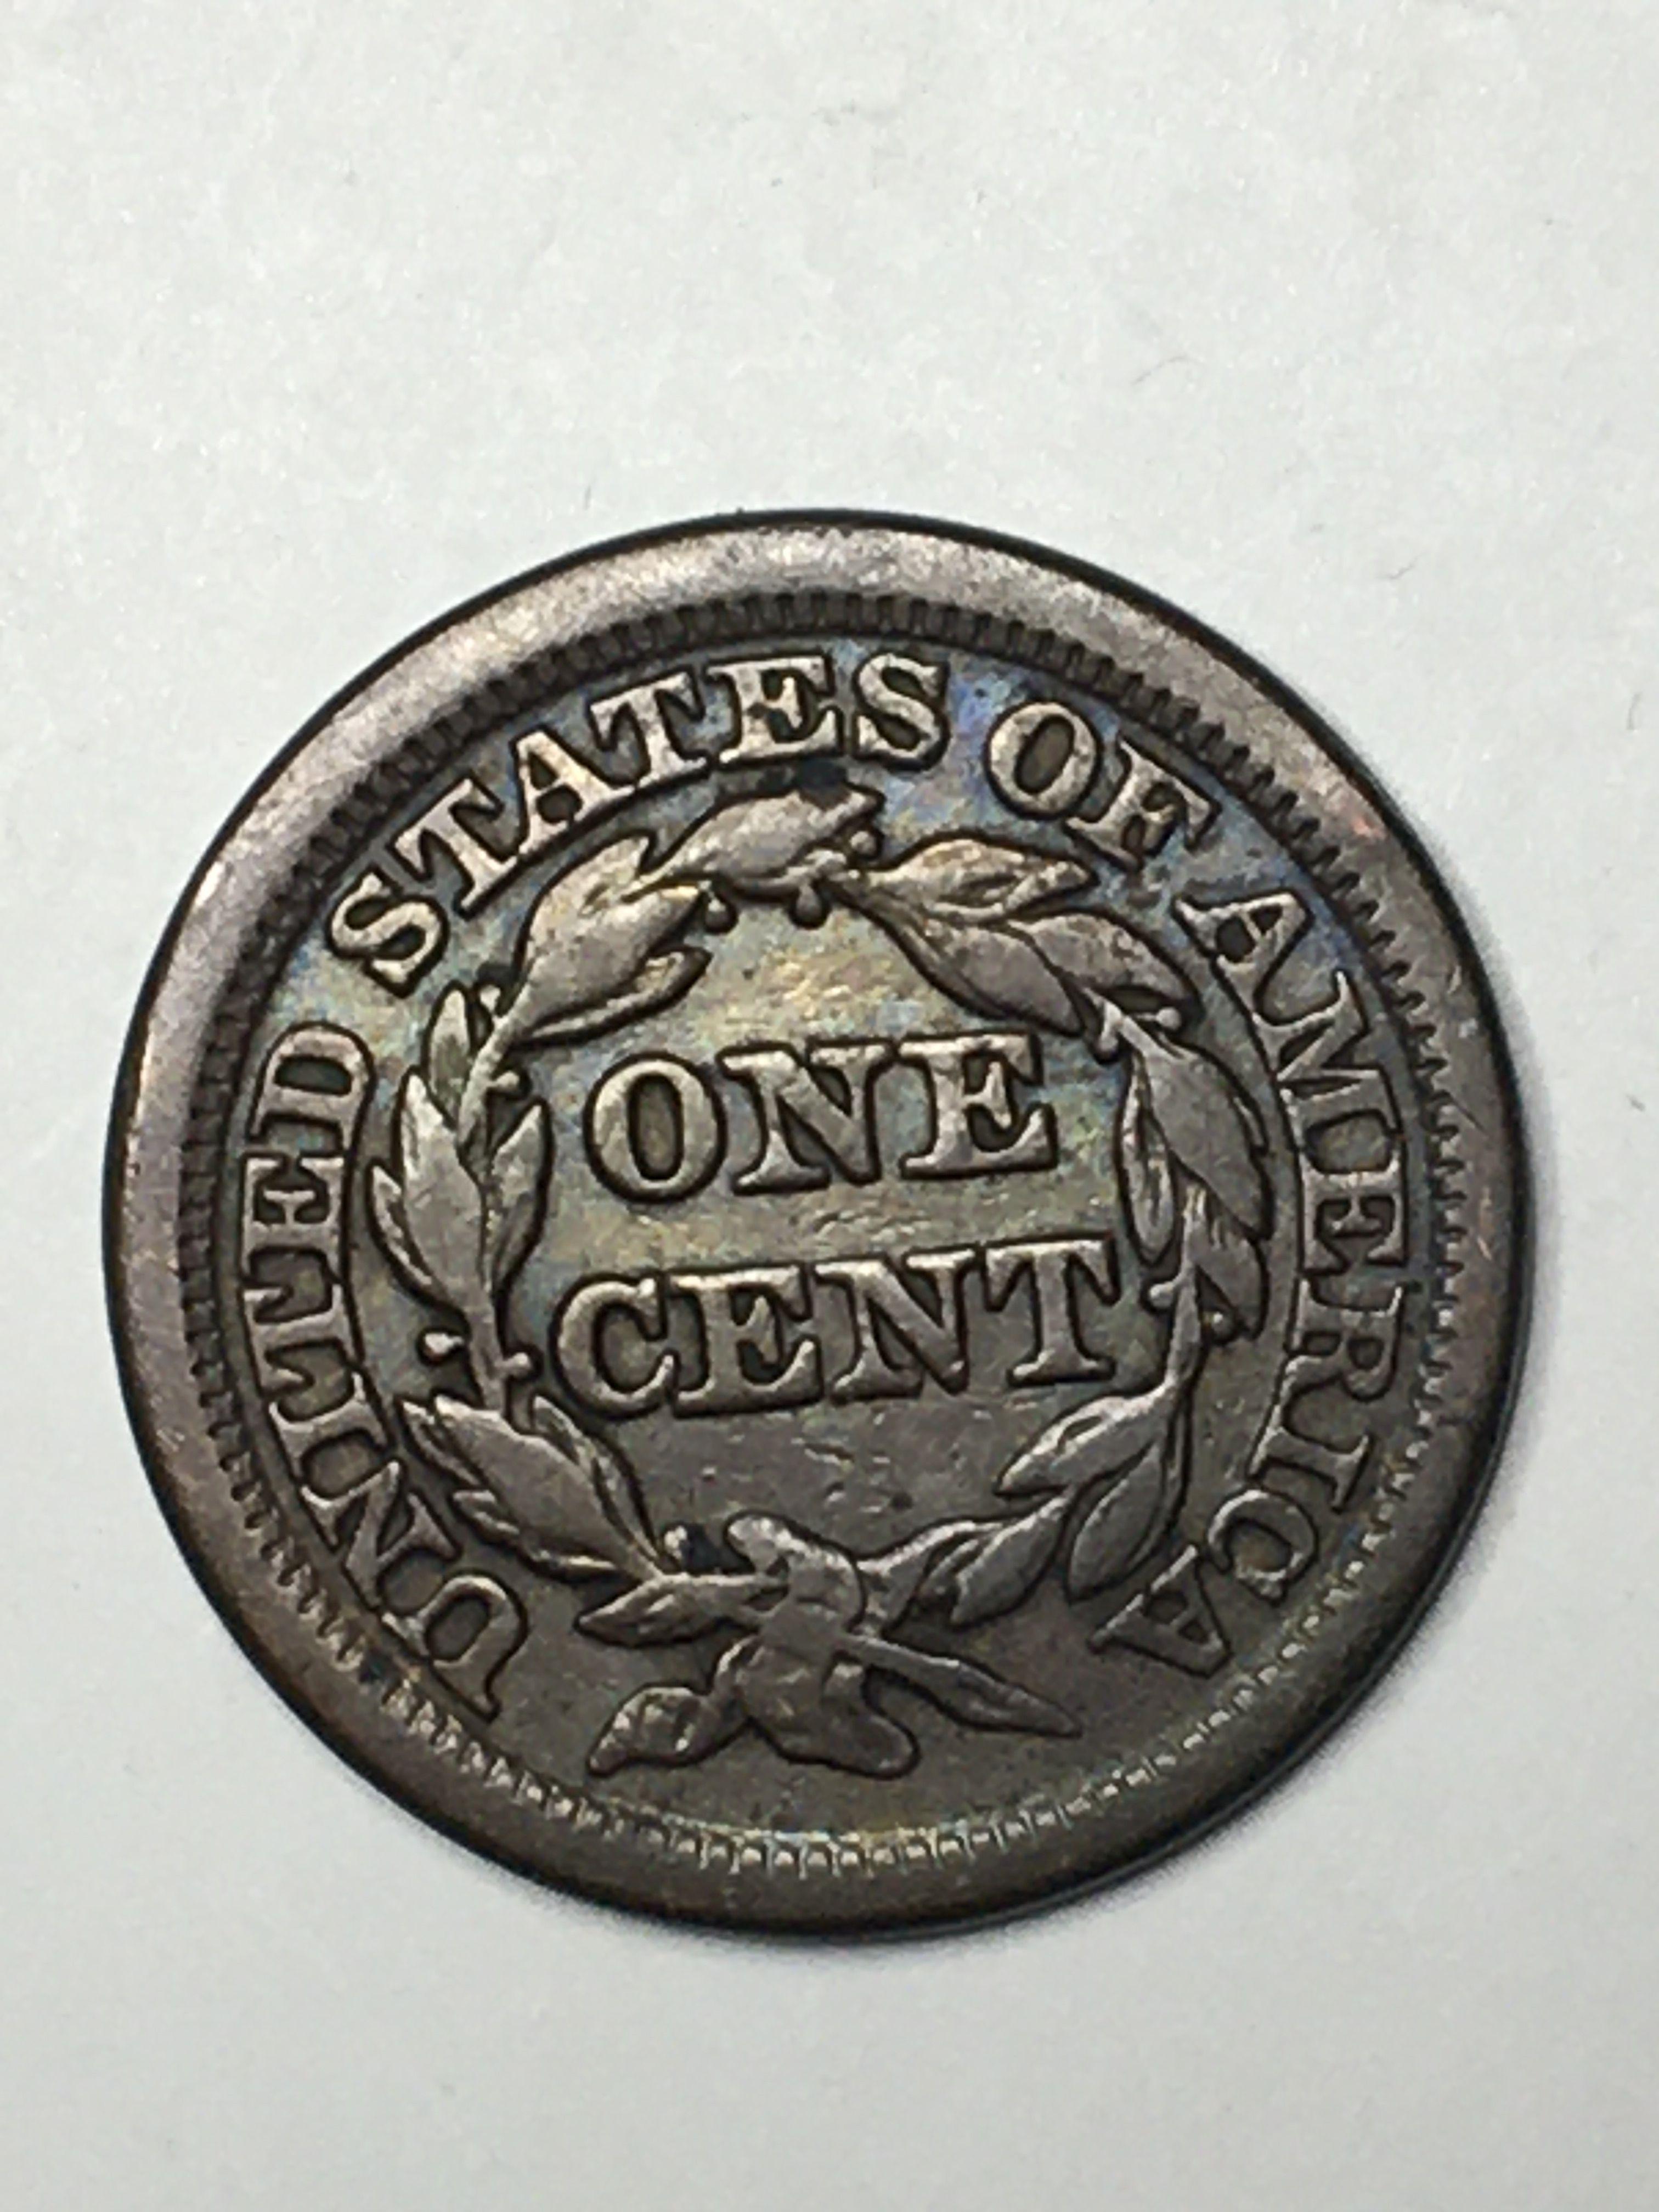 1848 U S Large Cent